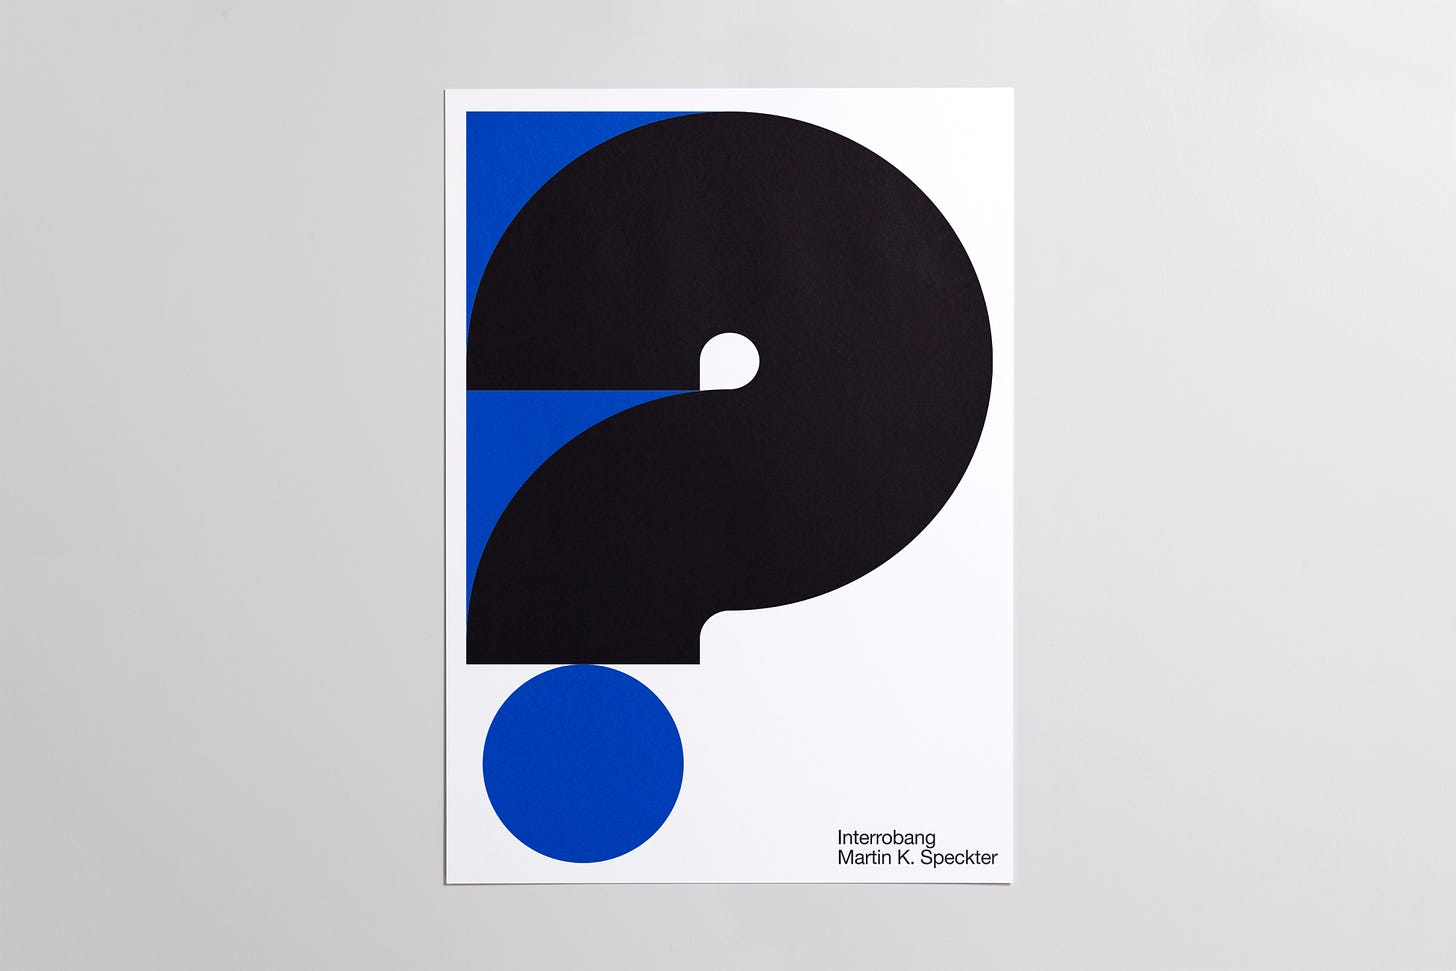 Poster of a blue and black interrobang, designed by Martin K. Speckter